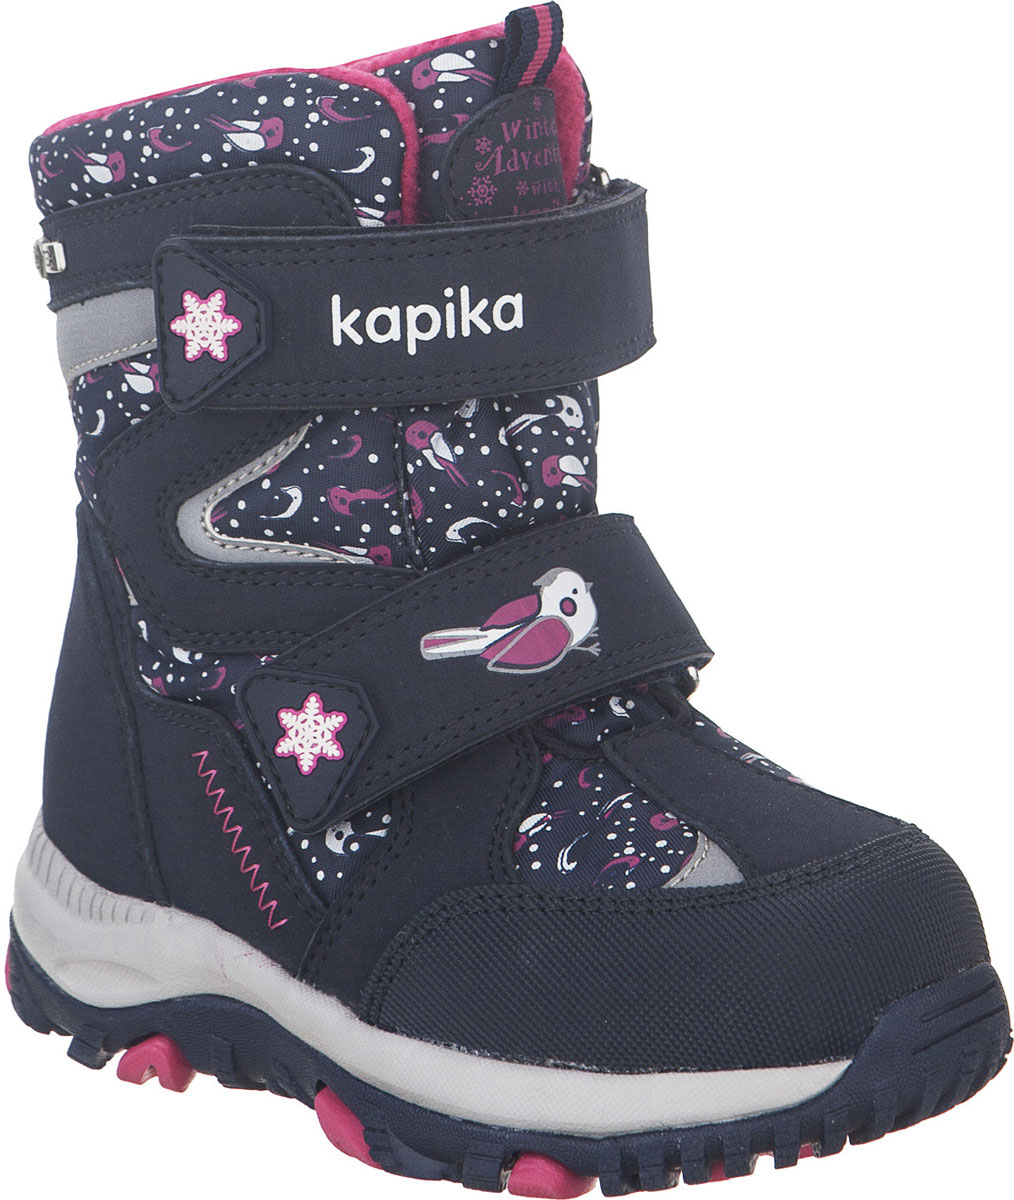 Ботинки для девочки Kapika, цвет: темно-синий, фуксия. 41222-1. Размер 24